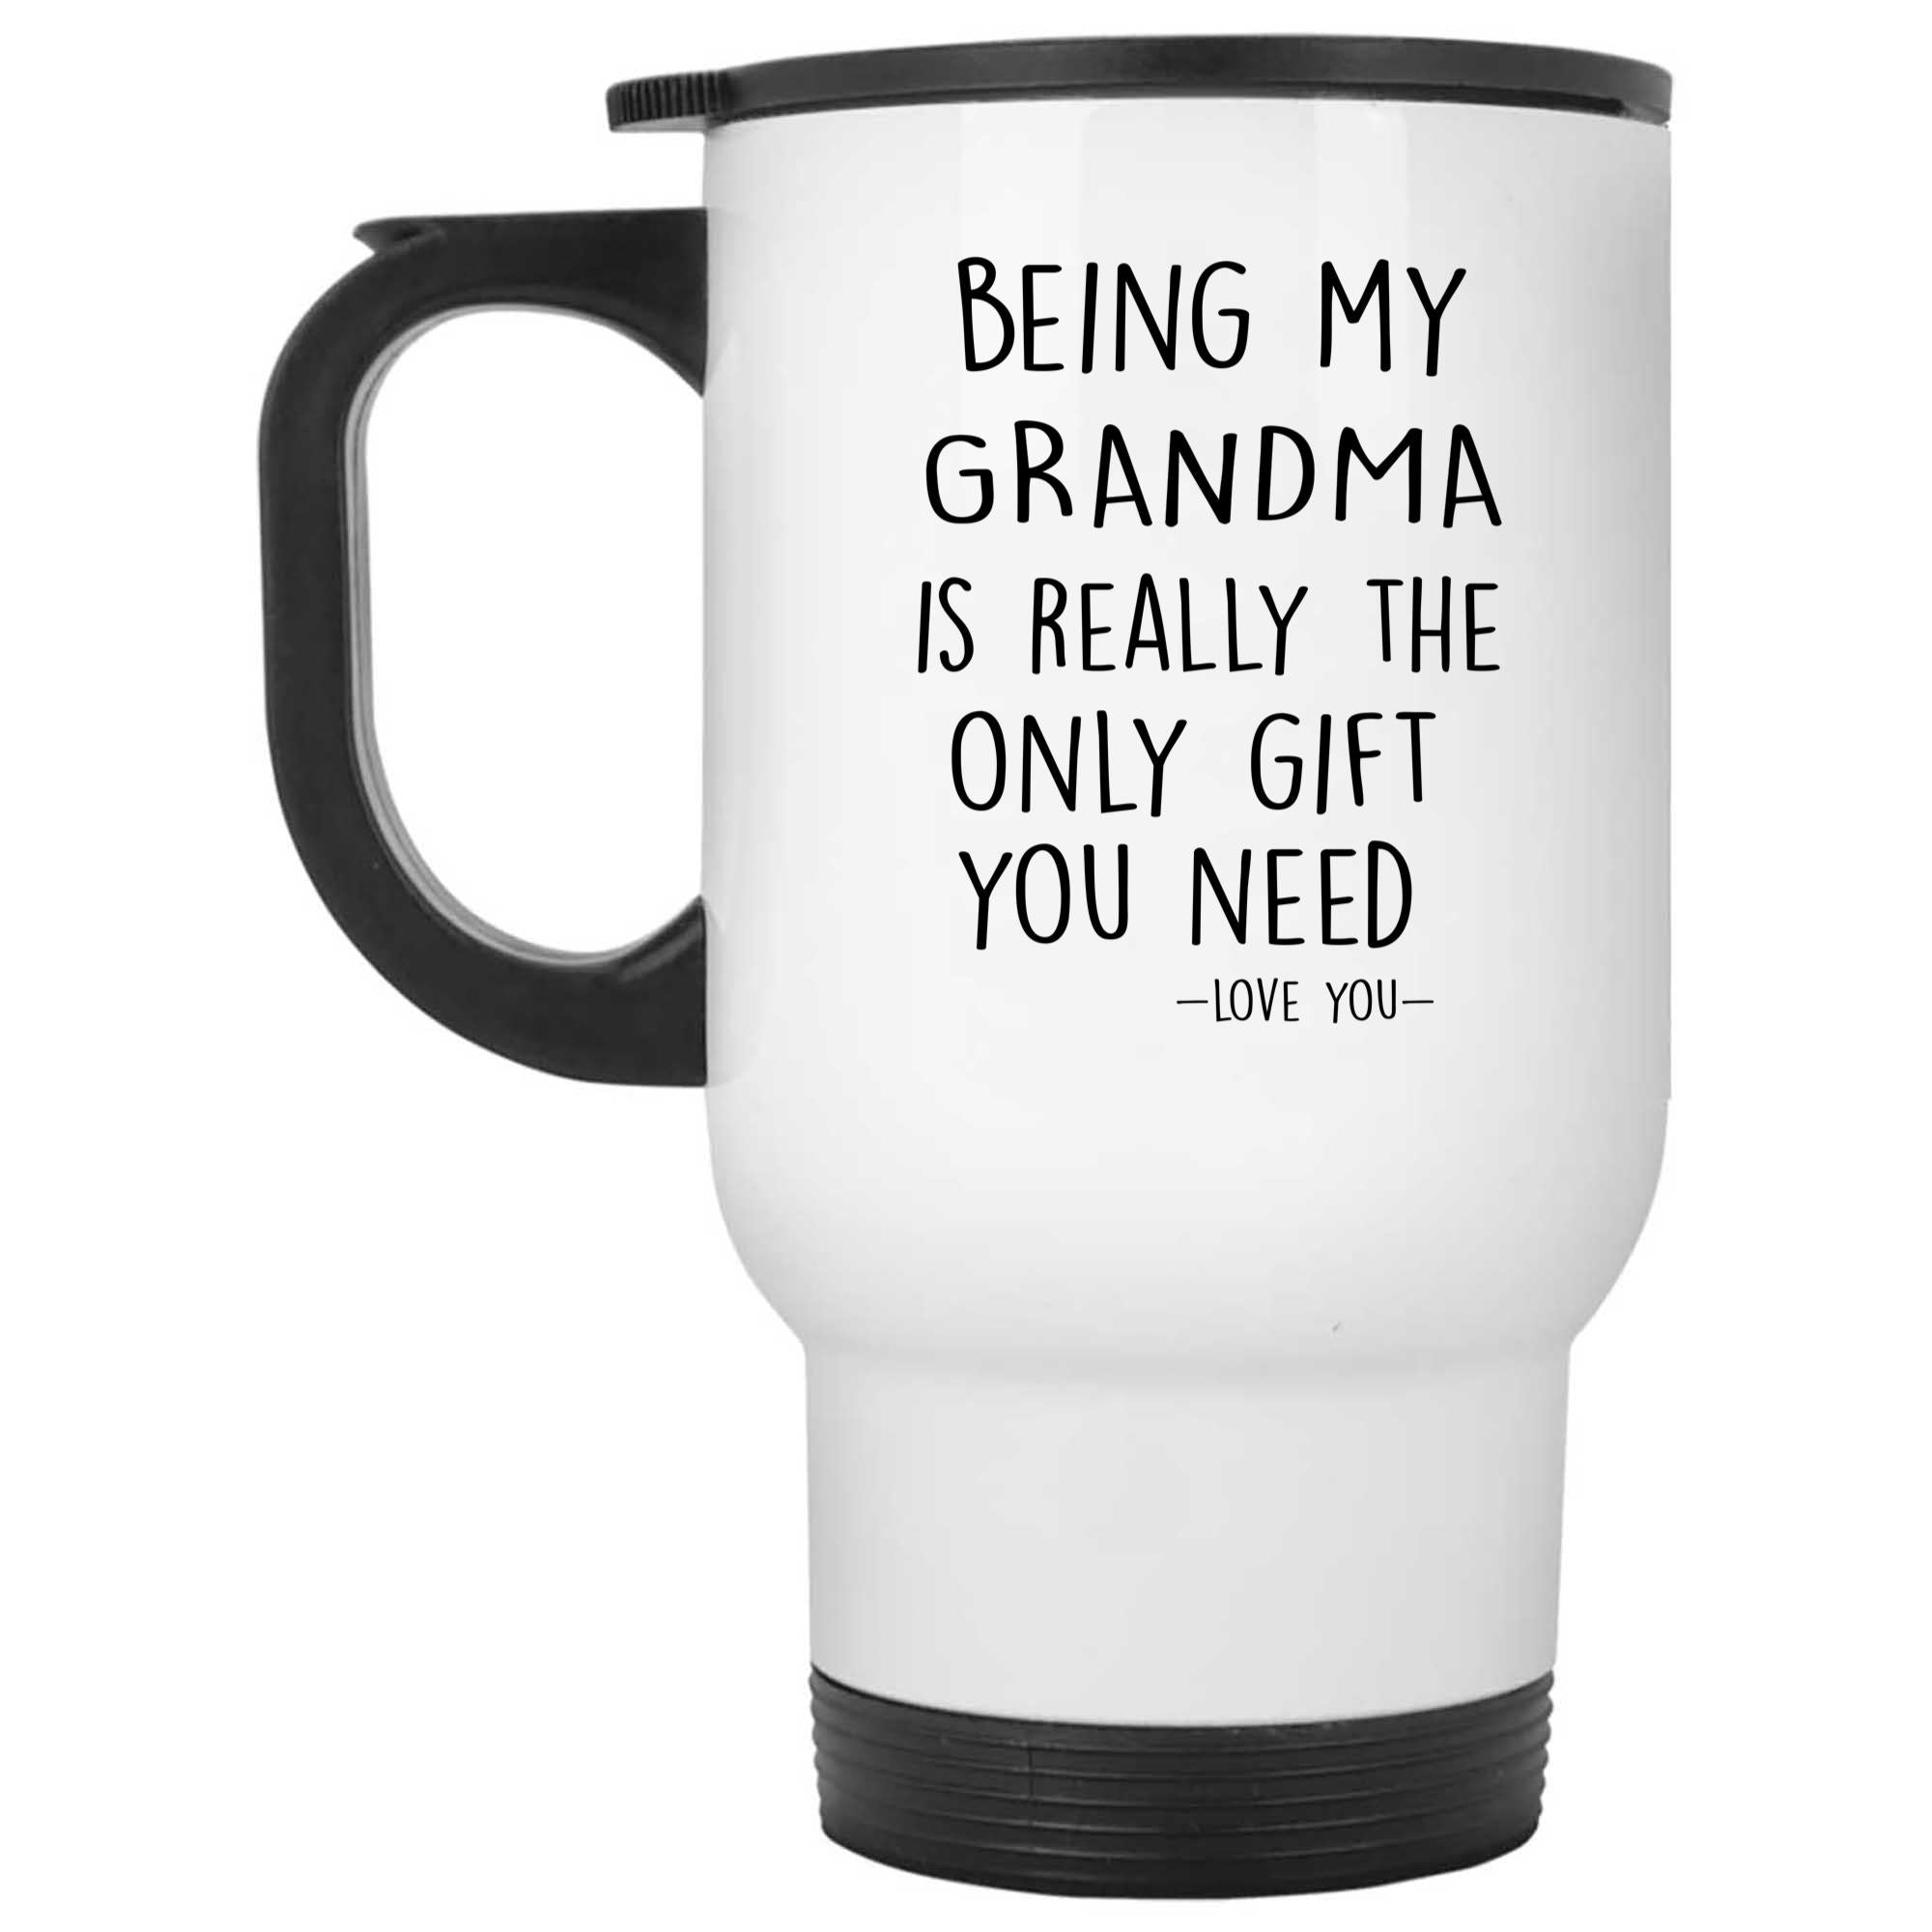 Skitongifts Funny Ceramic Novelty Coffee Mug Being My Grandma Is Really The Only Gift You Need - Love You Grandma Funny Gift yhBAU1U